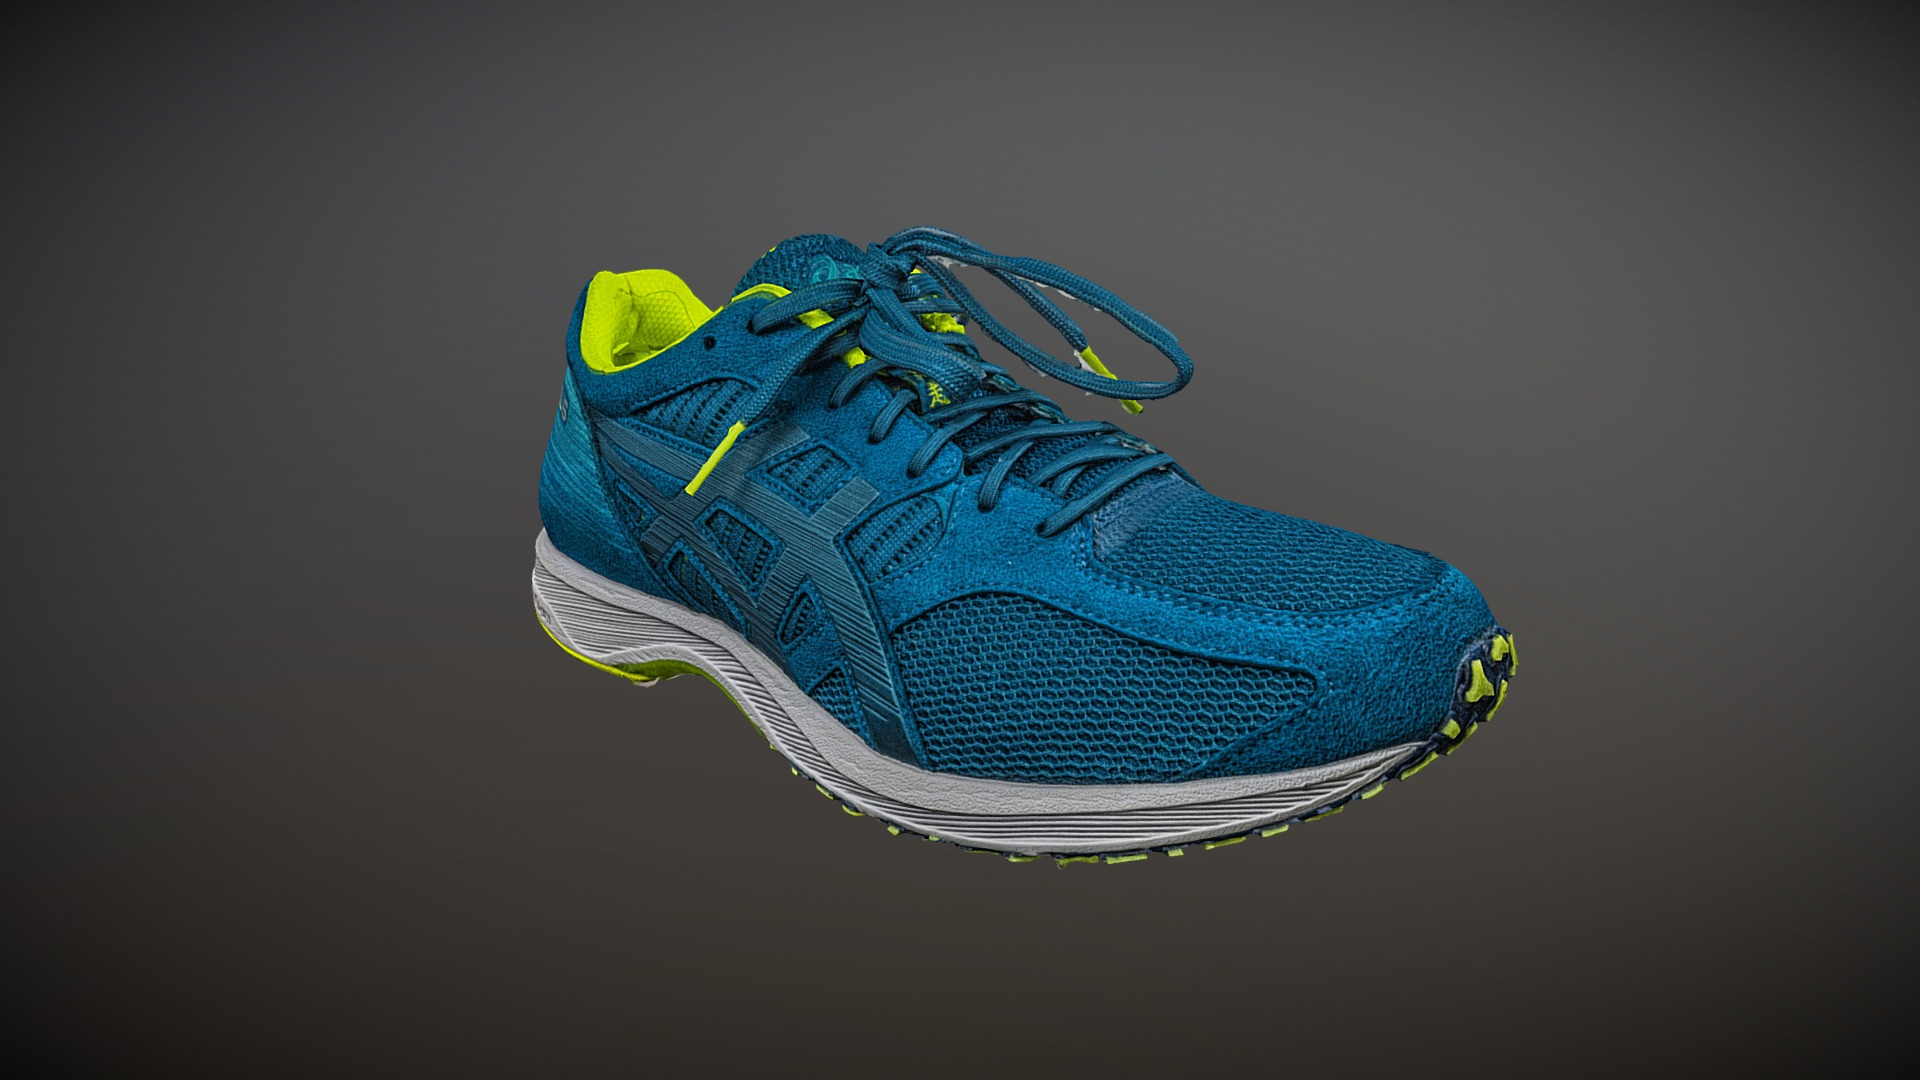 3D model Asics TARTHERZEAL 6 photogrammetry scan - This is a 3D model of the Asics TARTHERZEAL 6 photogrammetry scan. The 3D model is about a blue and yellow shoe.